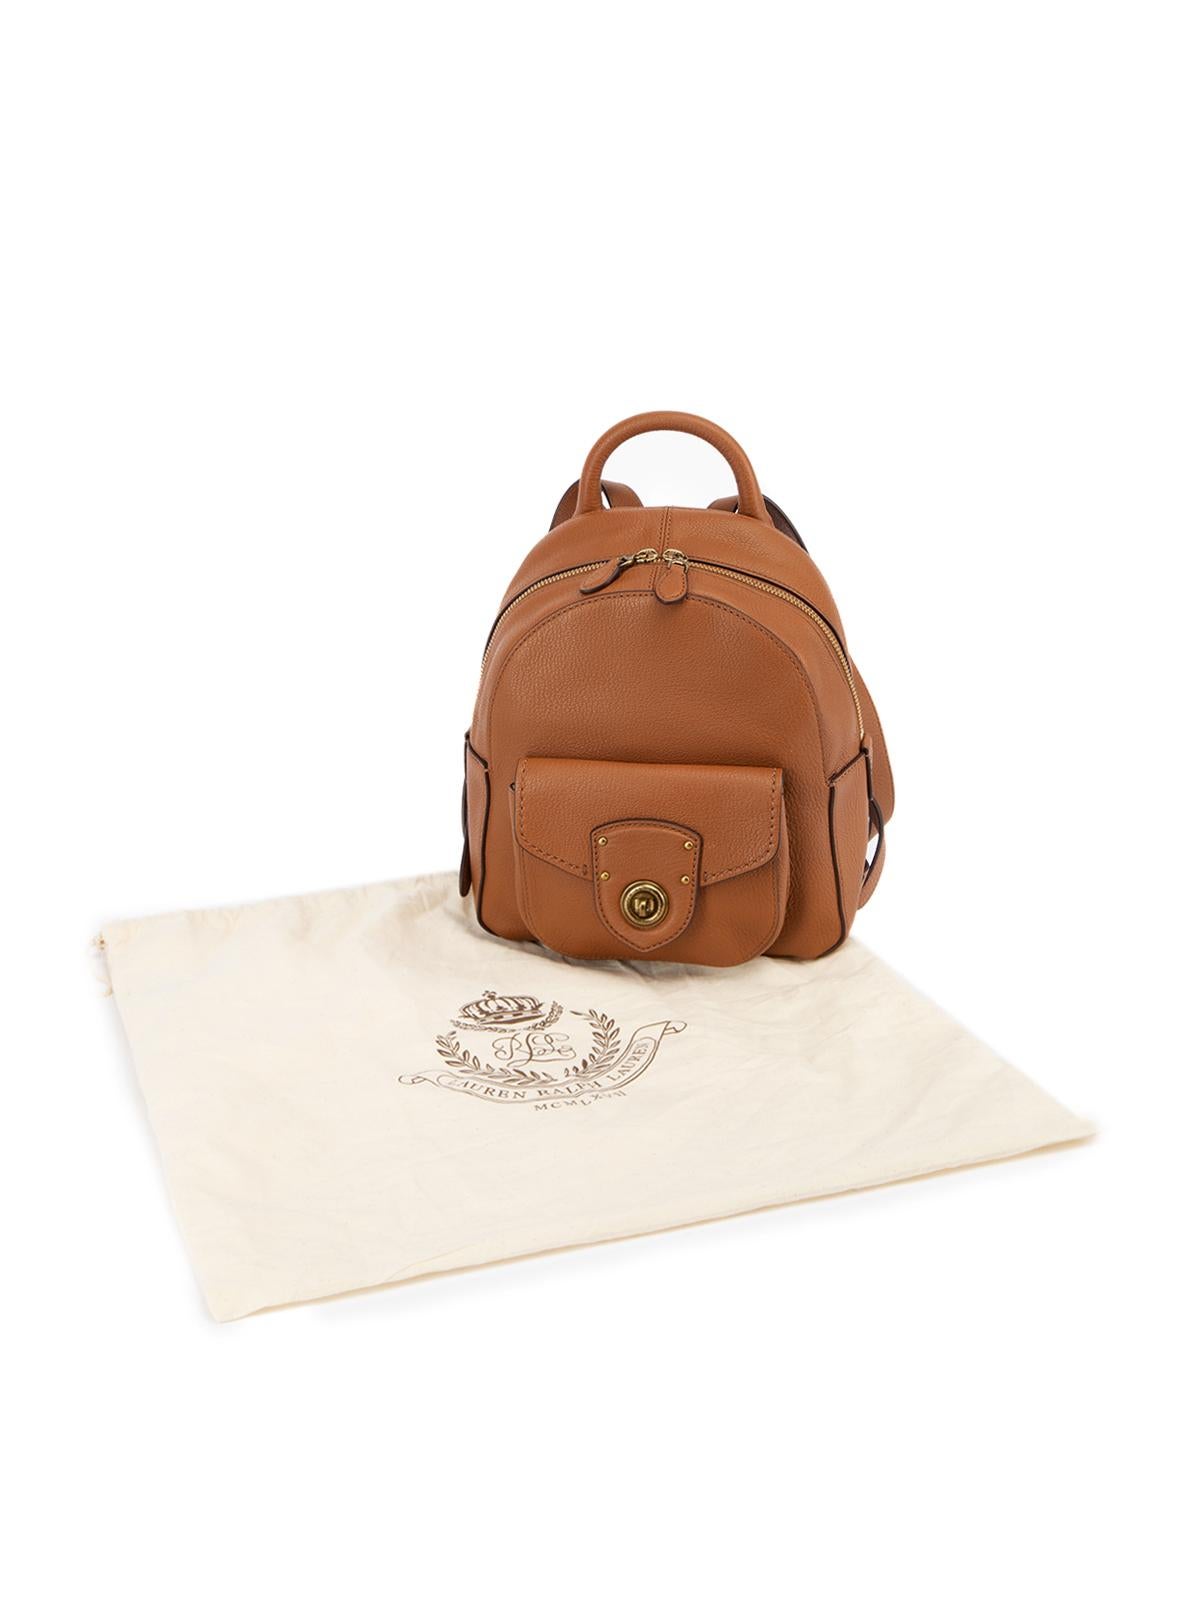 Pre-Loved Ralph Lauren Women's Brown Leather Mini Backpack 2